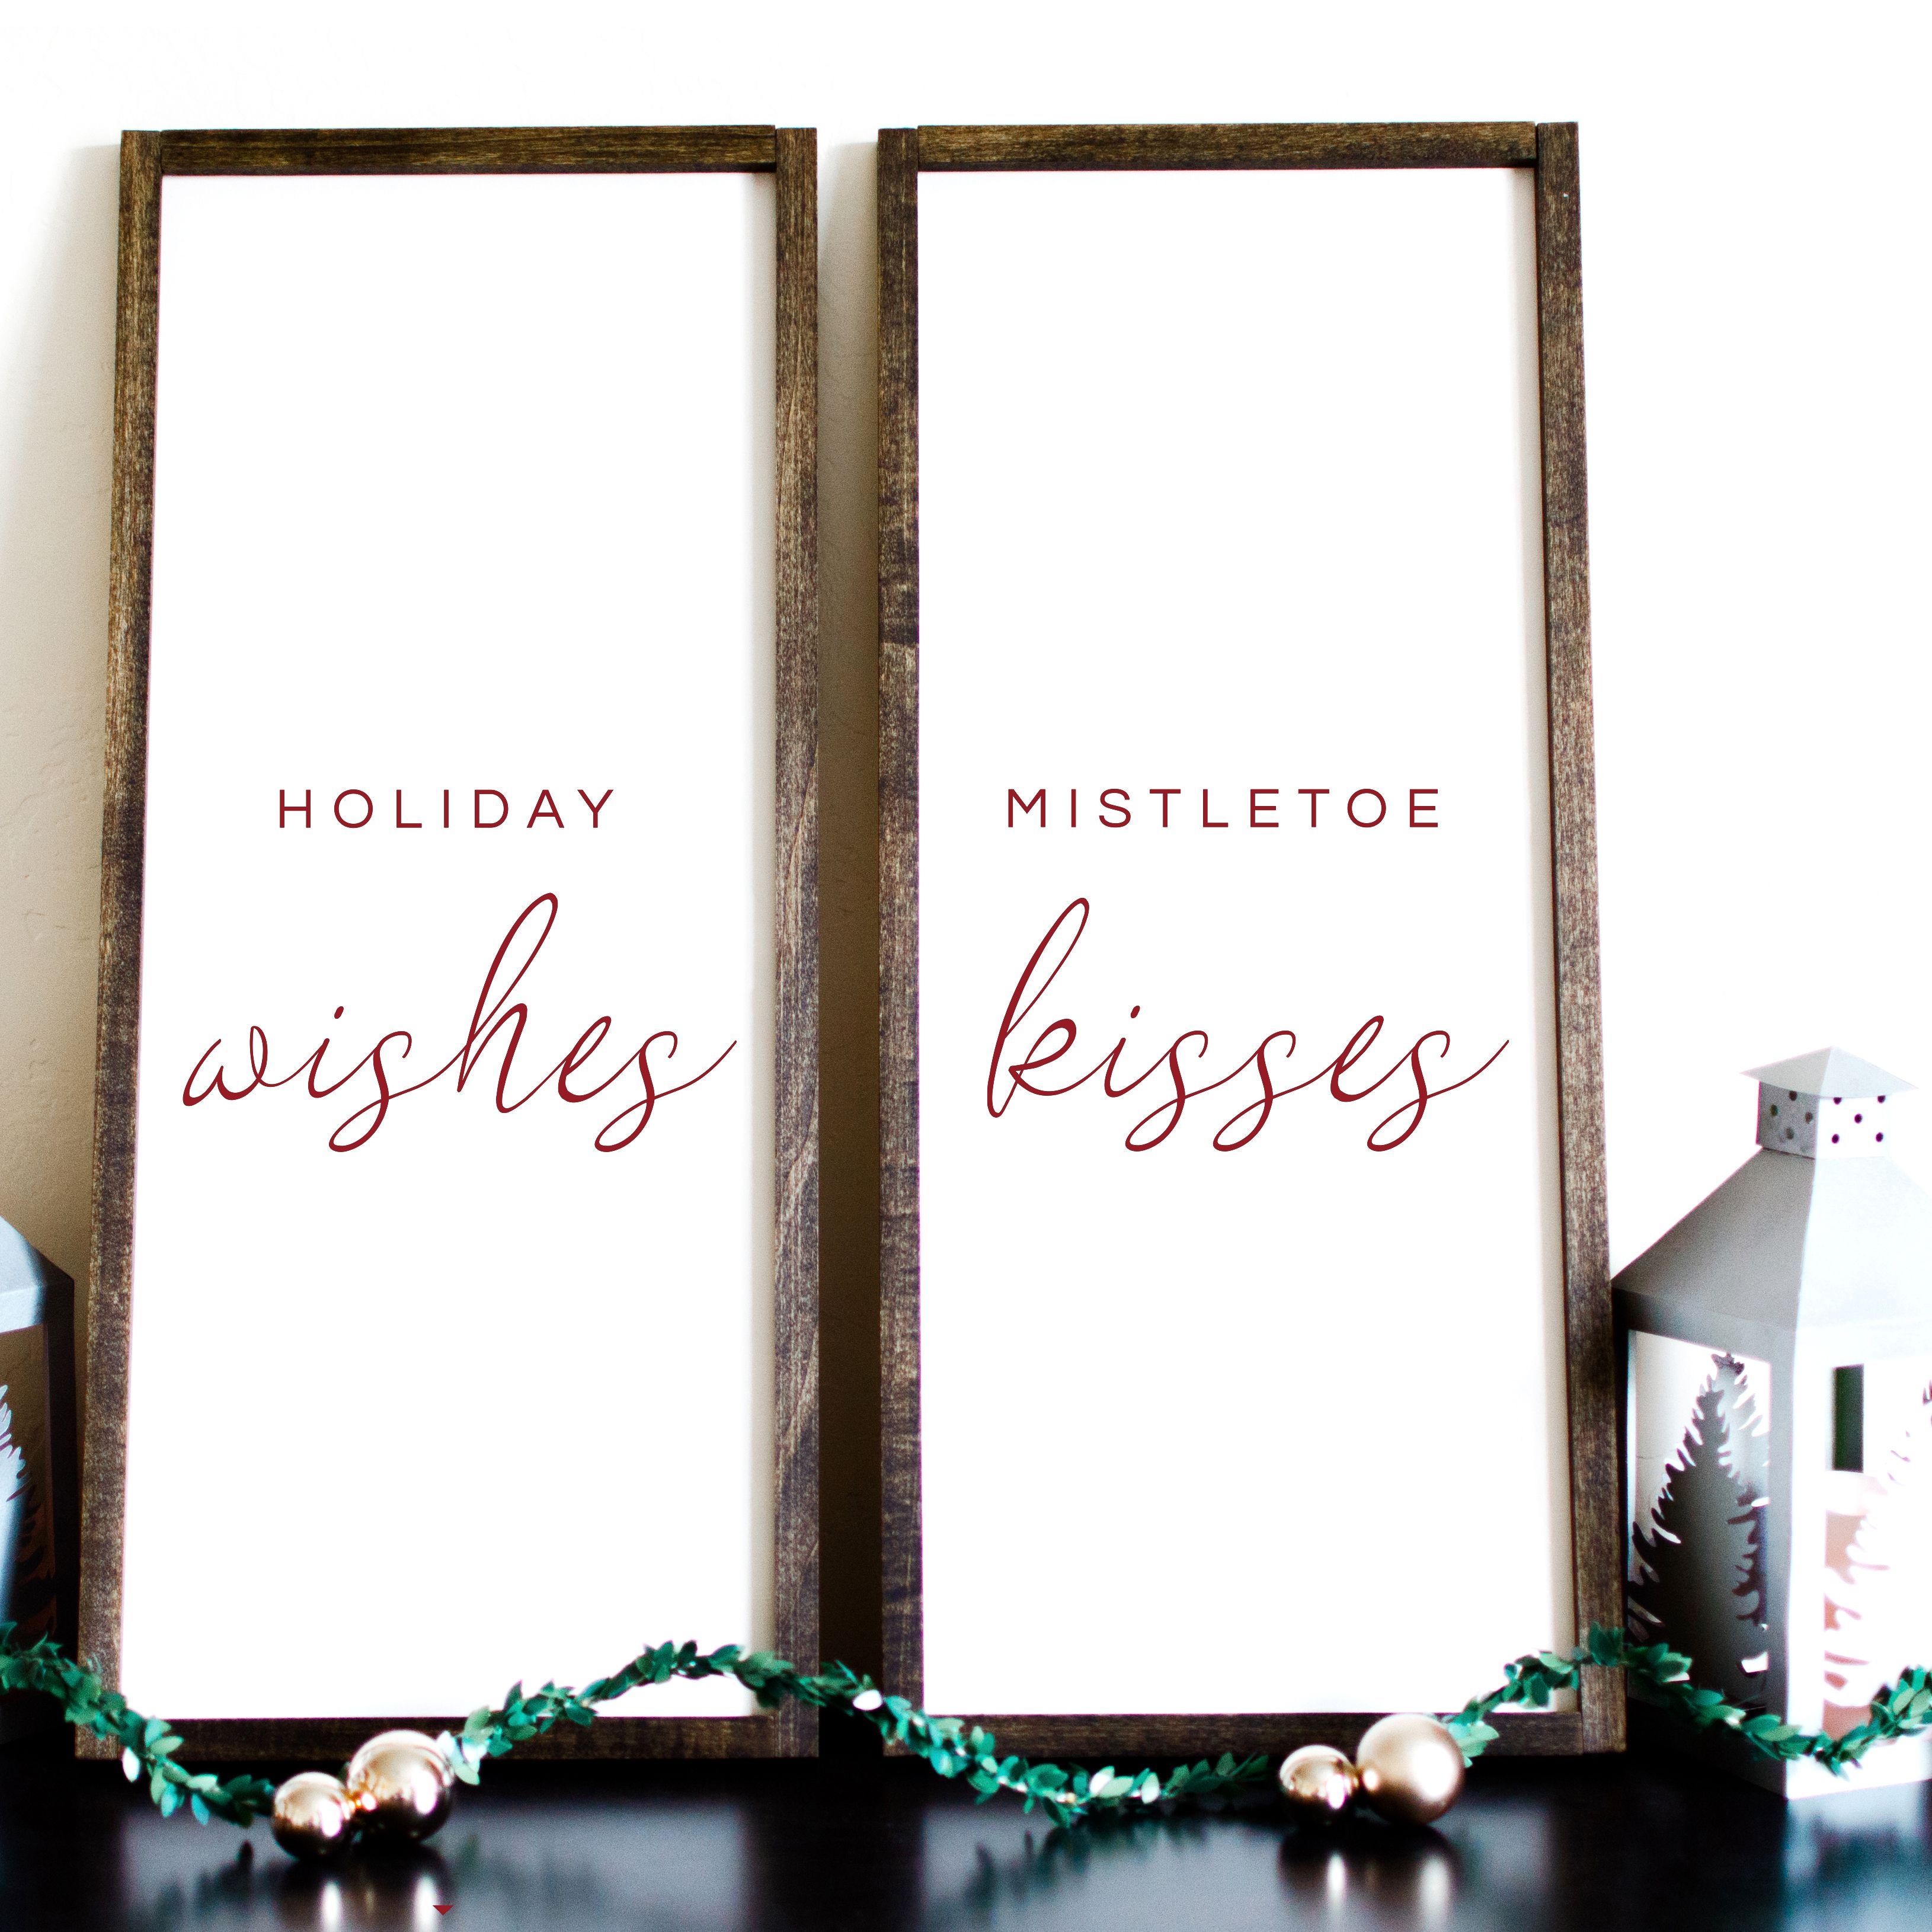 Holiday Wishes Mistletoe Kisses Wood Sign  Christmas Wood Signs  Christmas Decor -   14 holiday Sayings how to make ideas